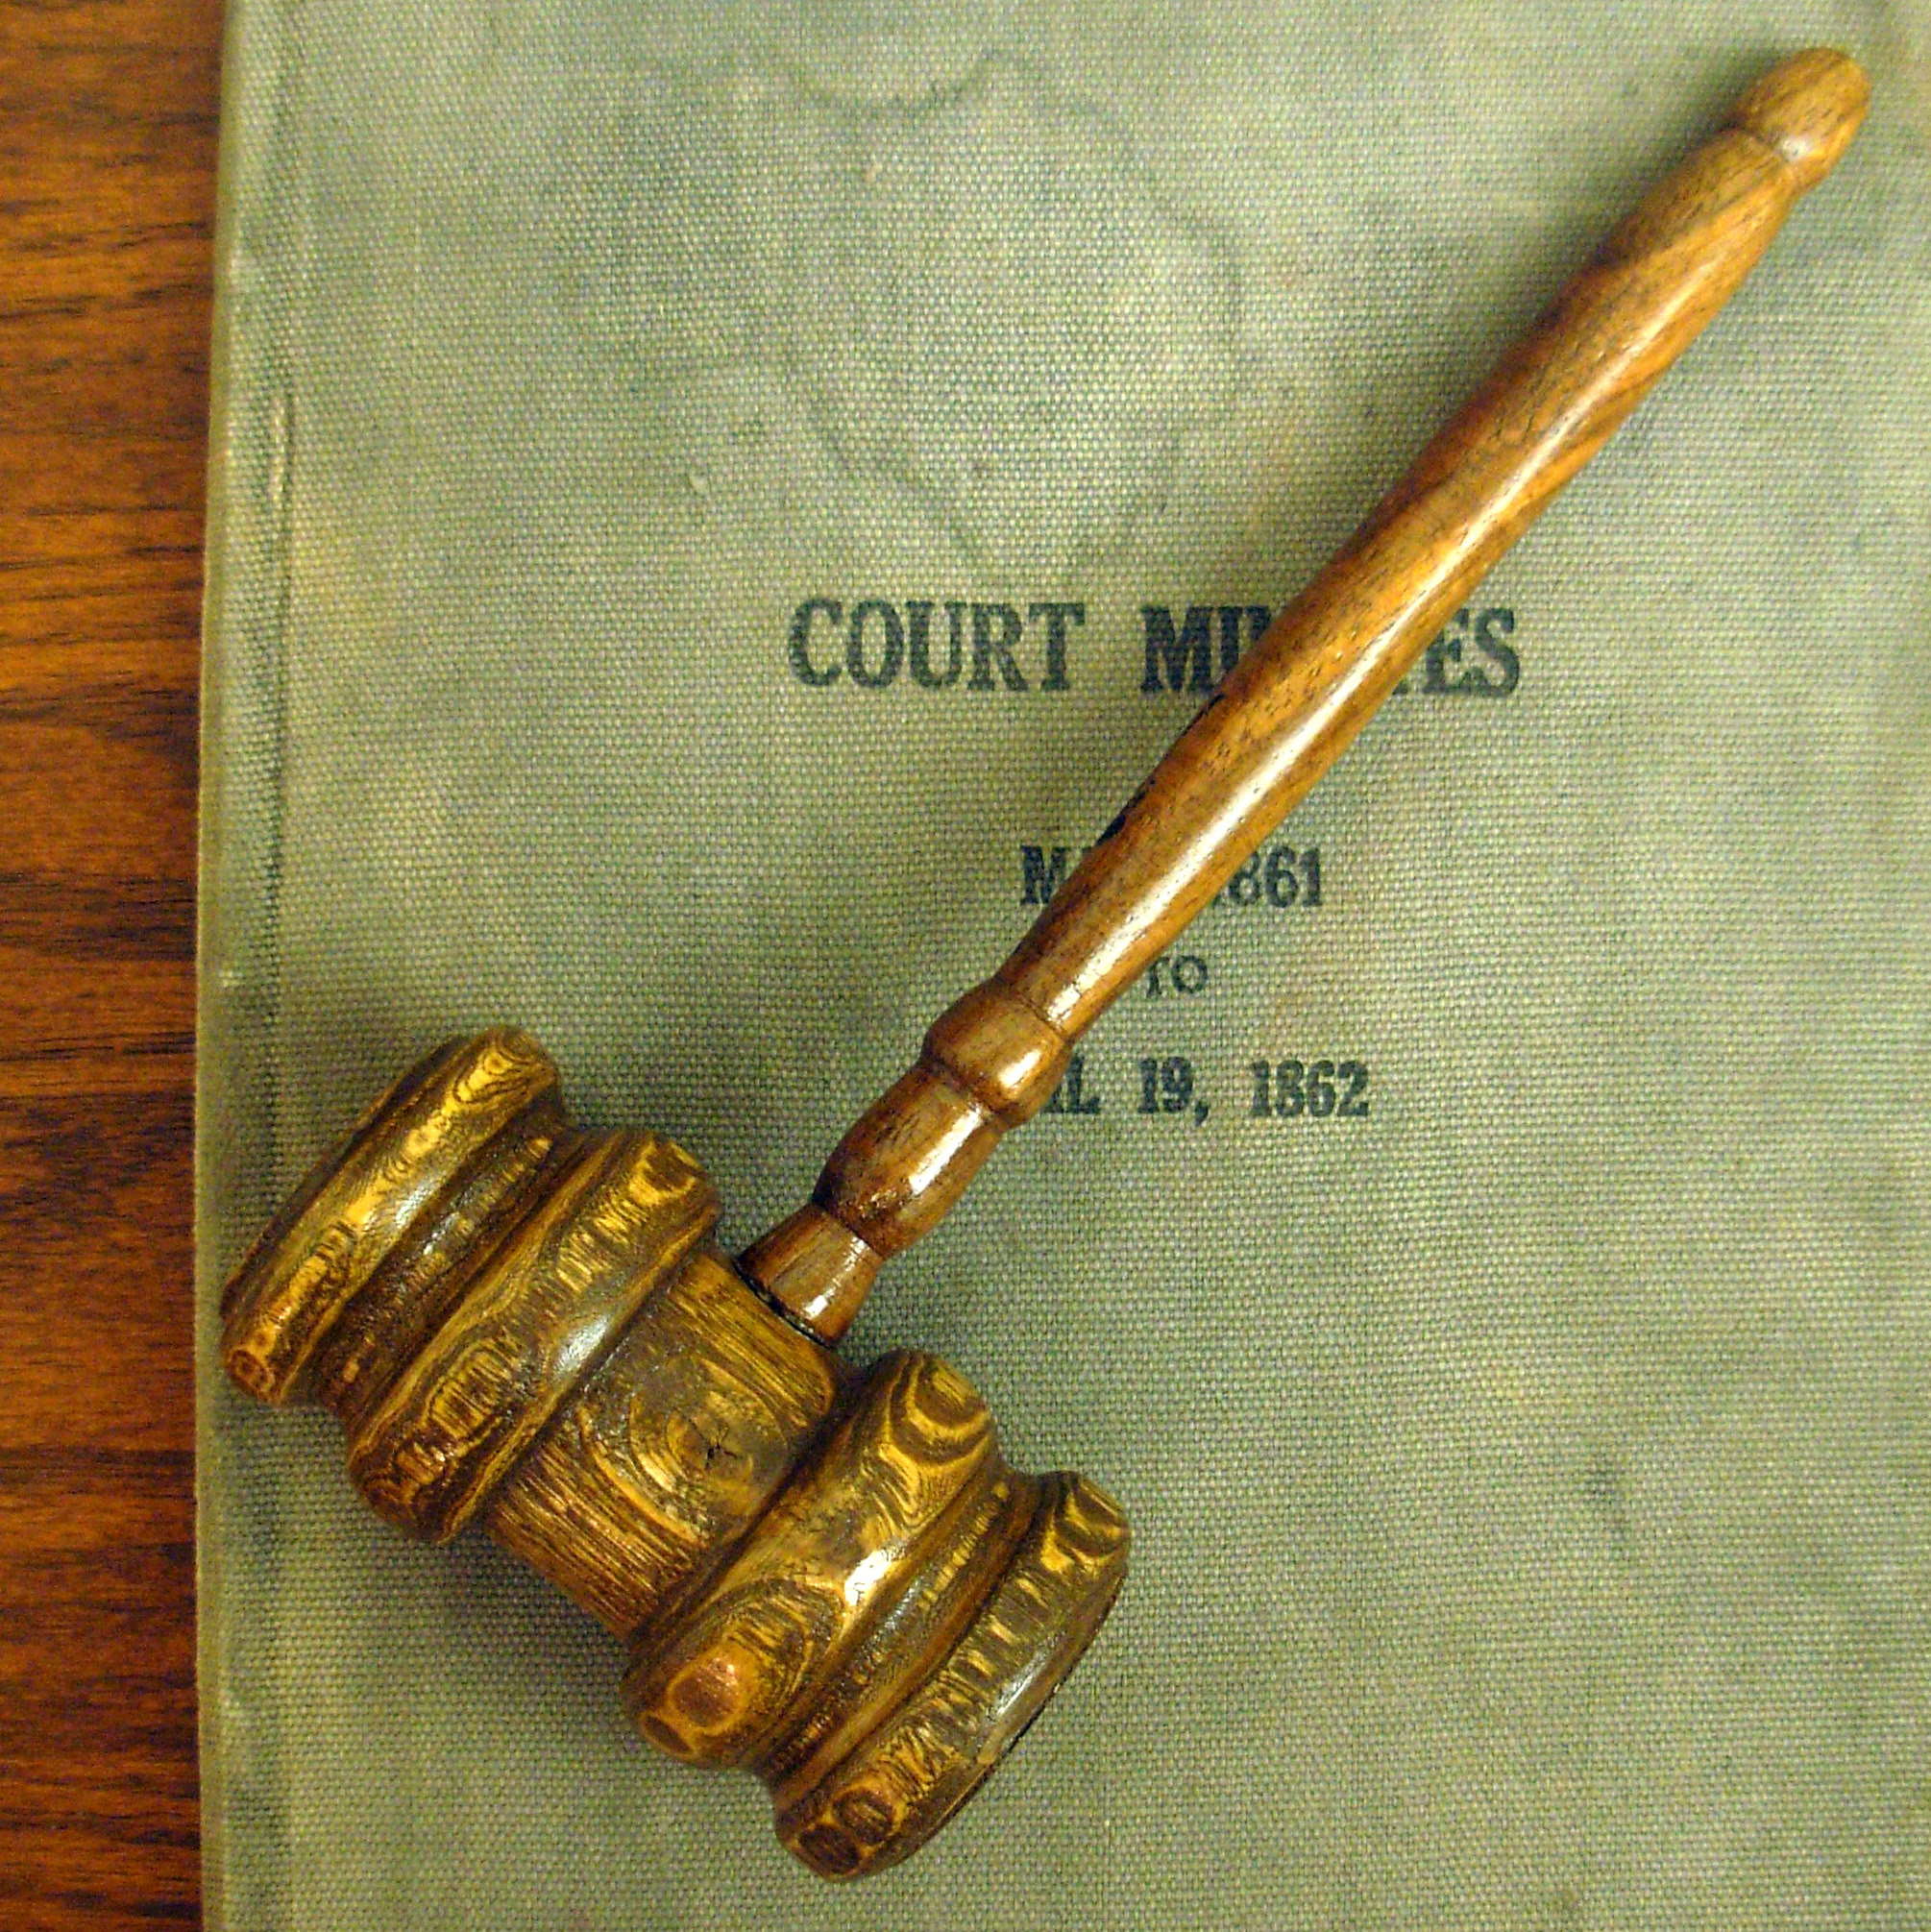 Official court gavel